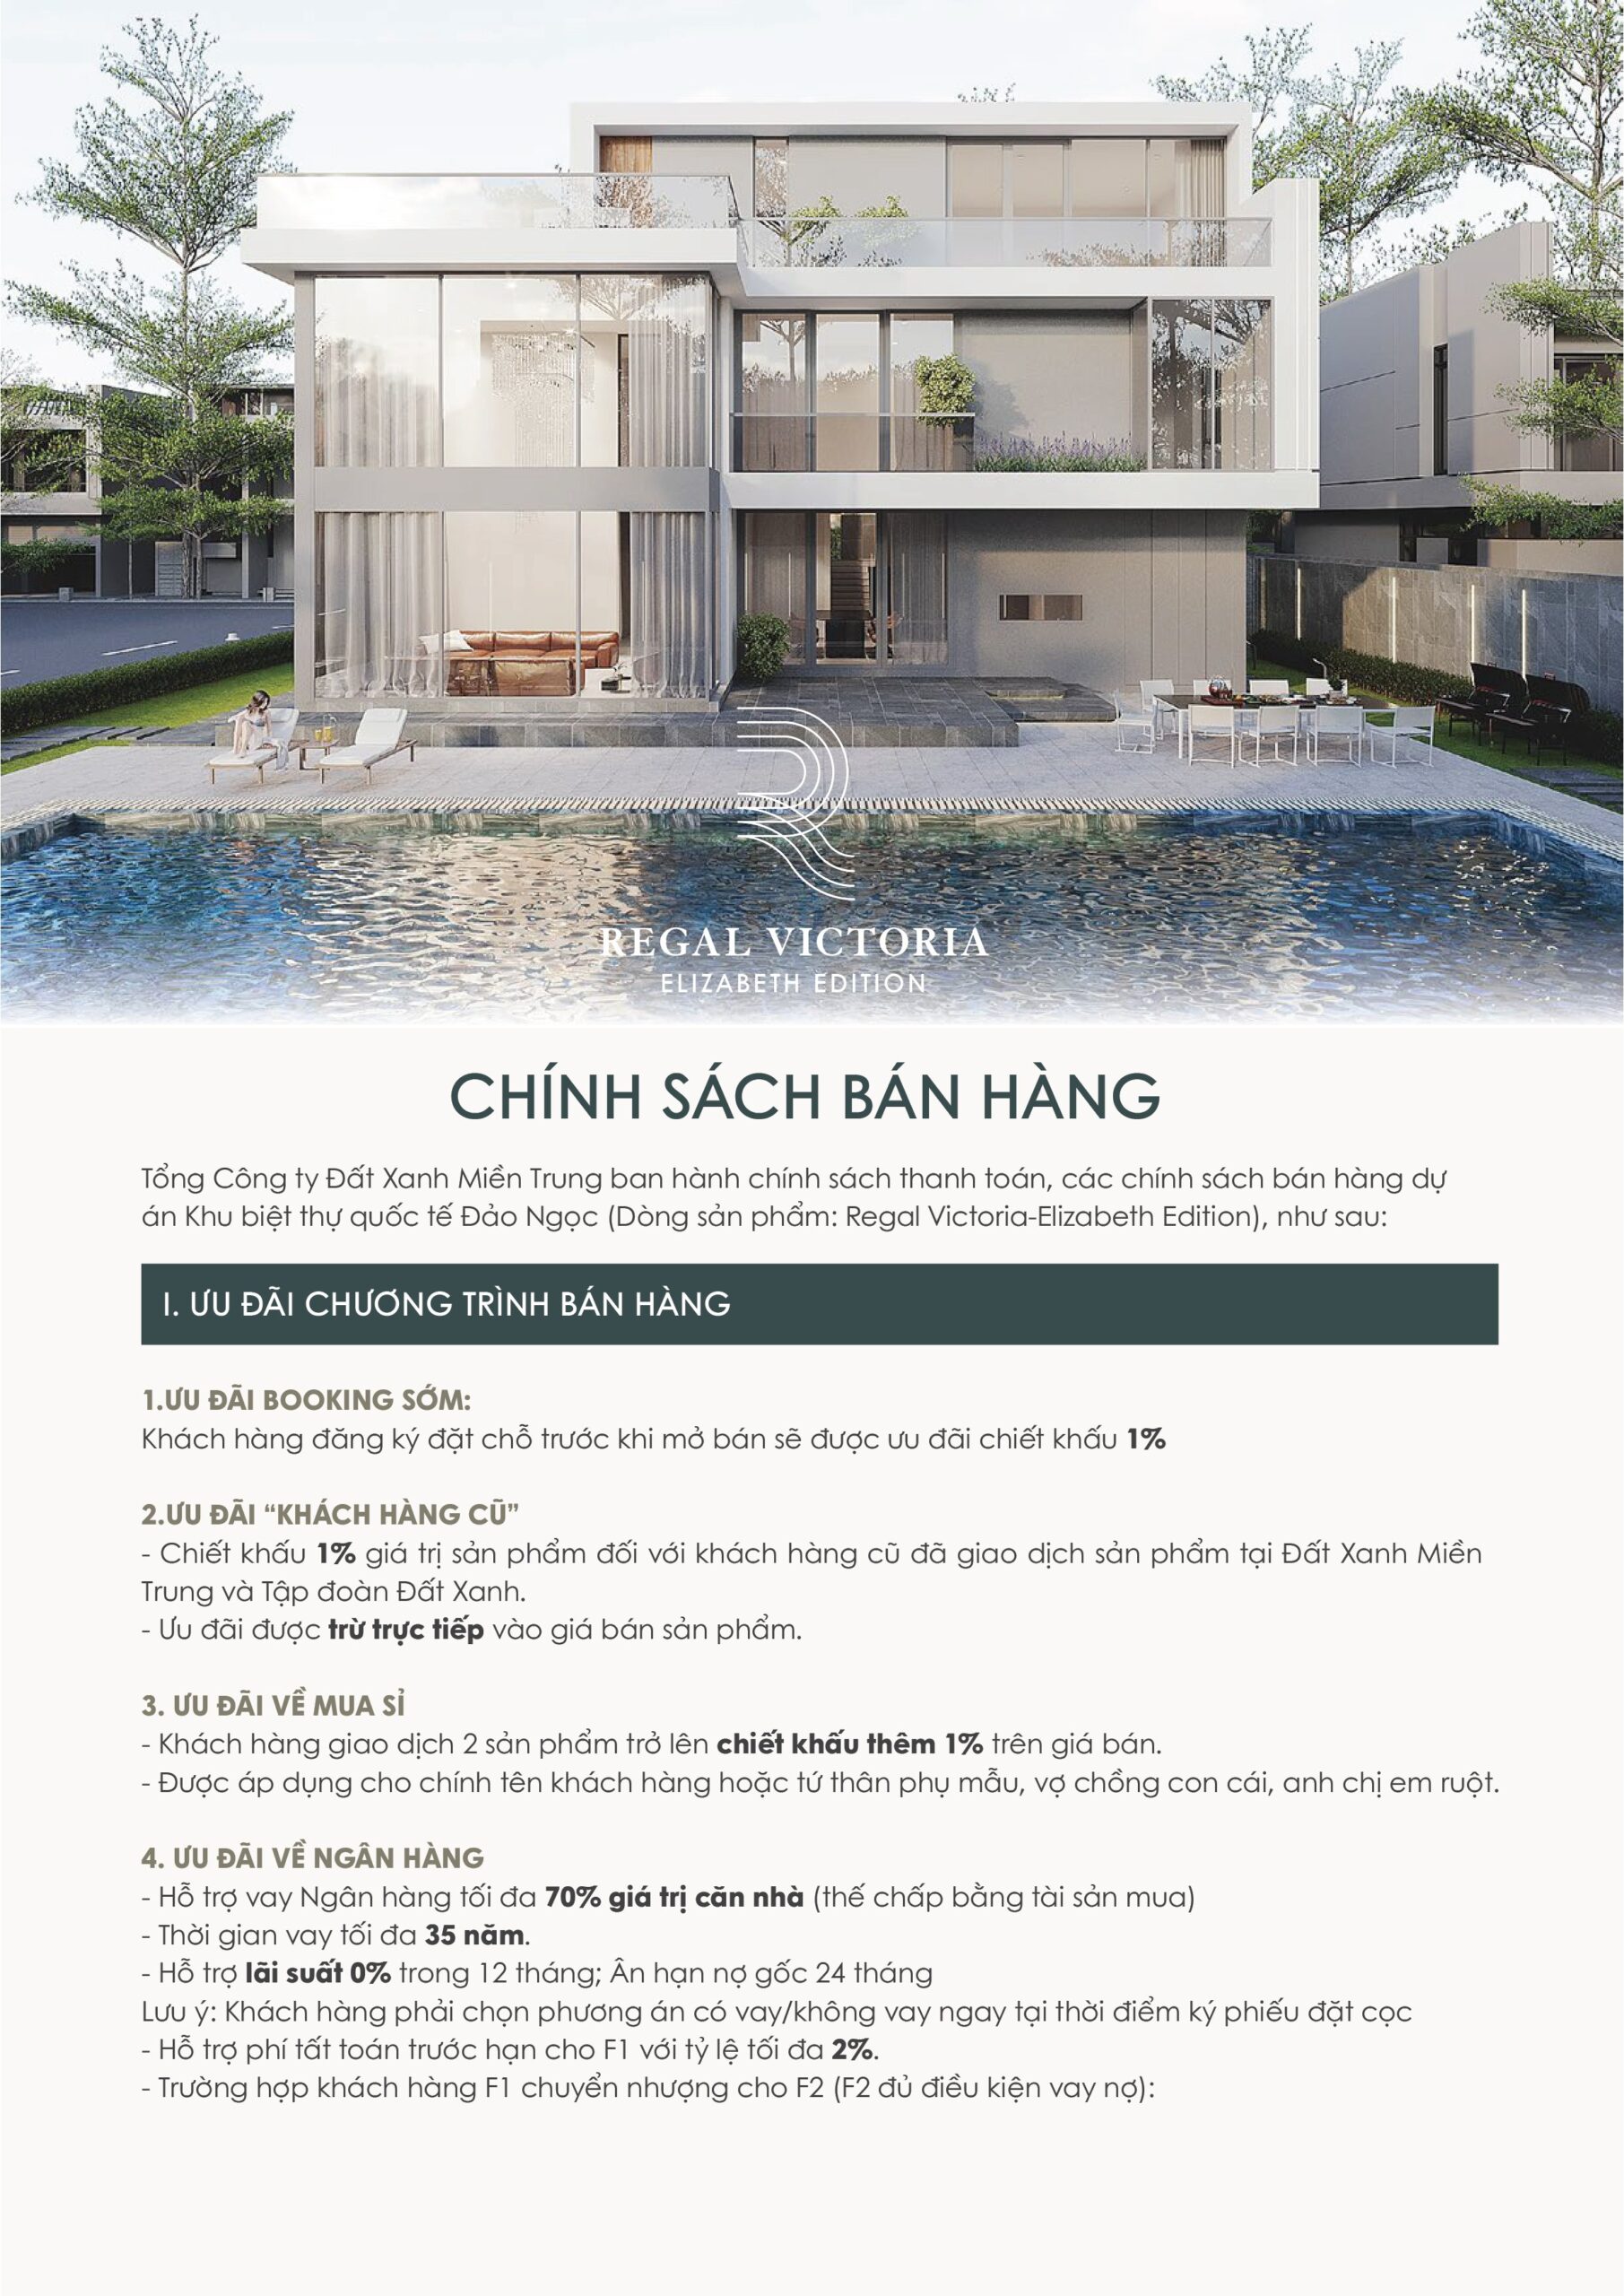 Chinh Sach Ban Hang Regal Victoria (2)